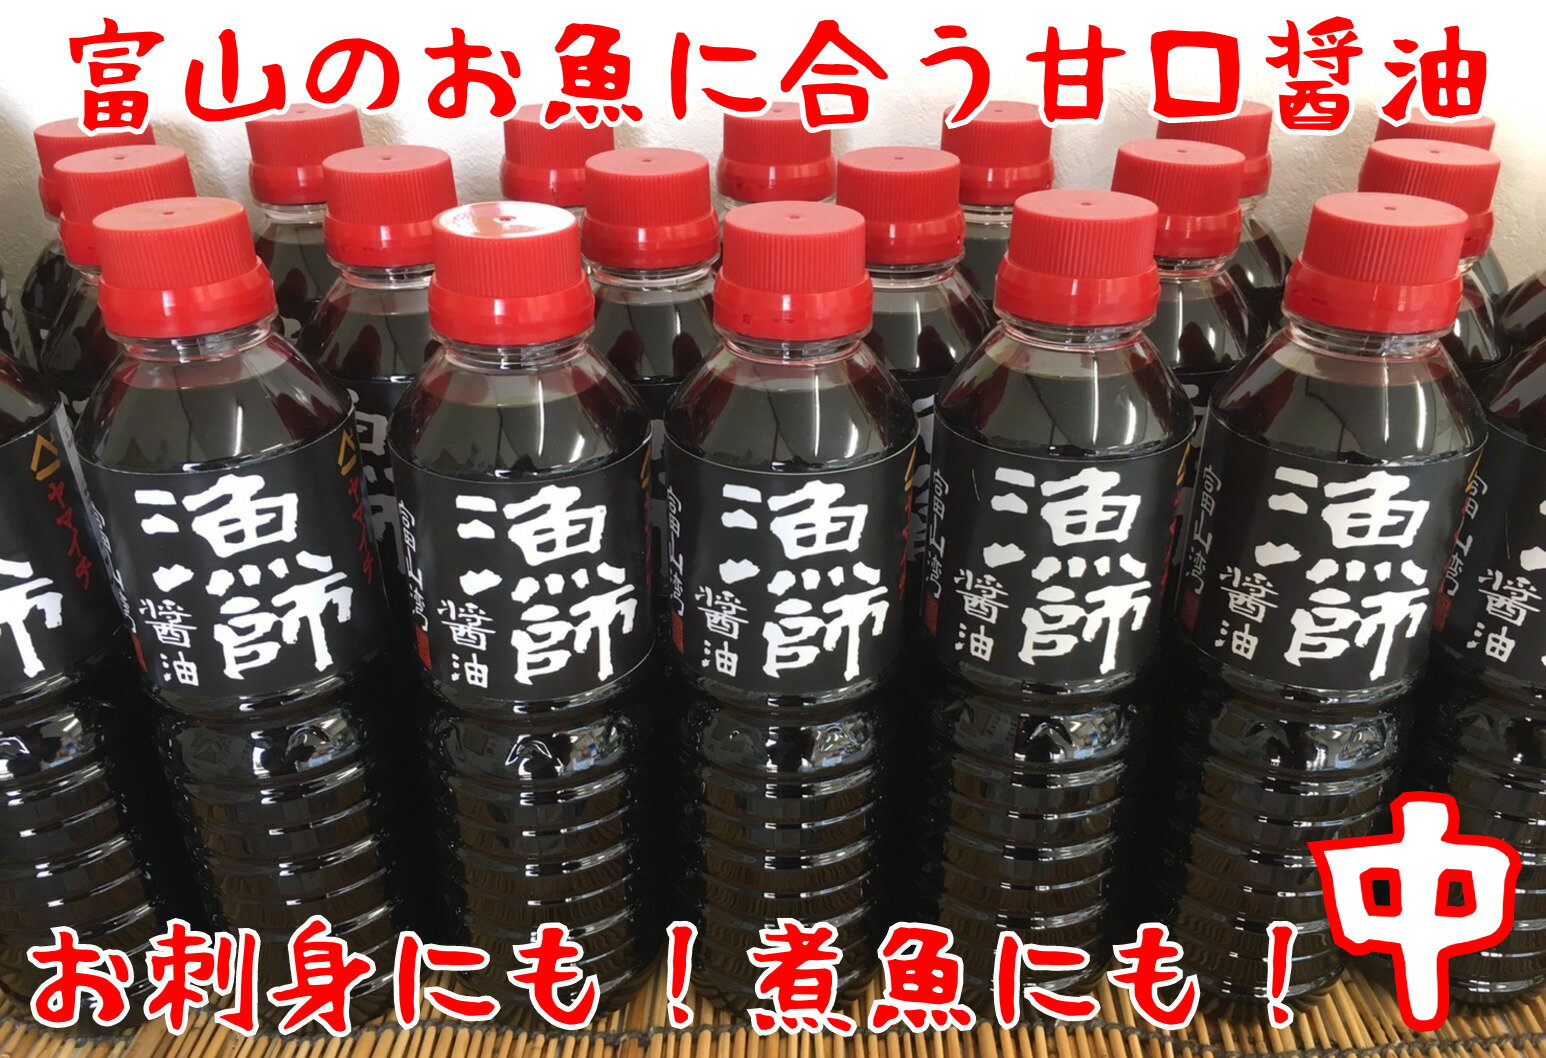 SALE／56%OFF】 宮島醤油 特級 ばら濃口醤油 1.5L × 6本 riosmauricio.com